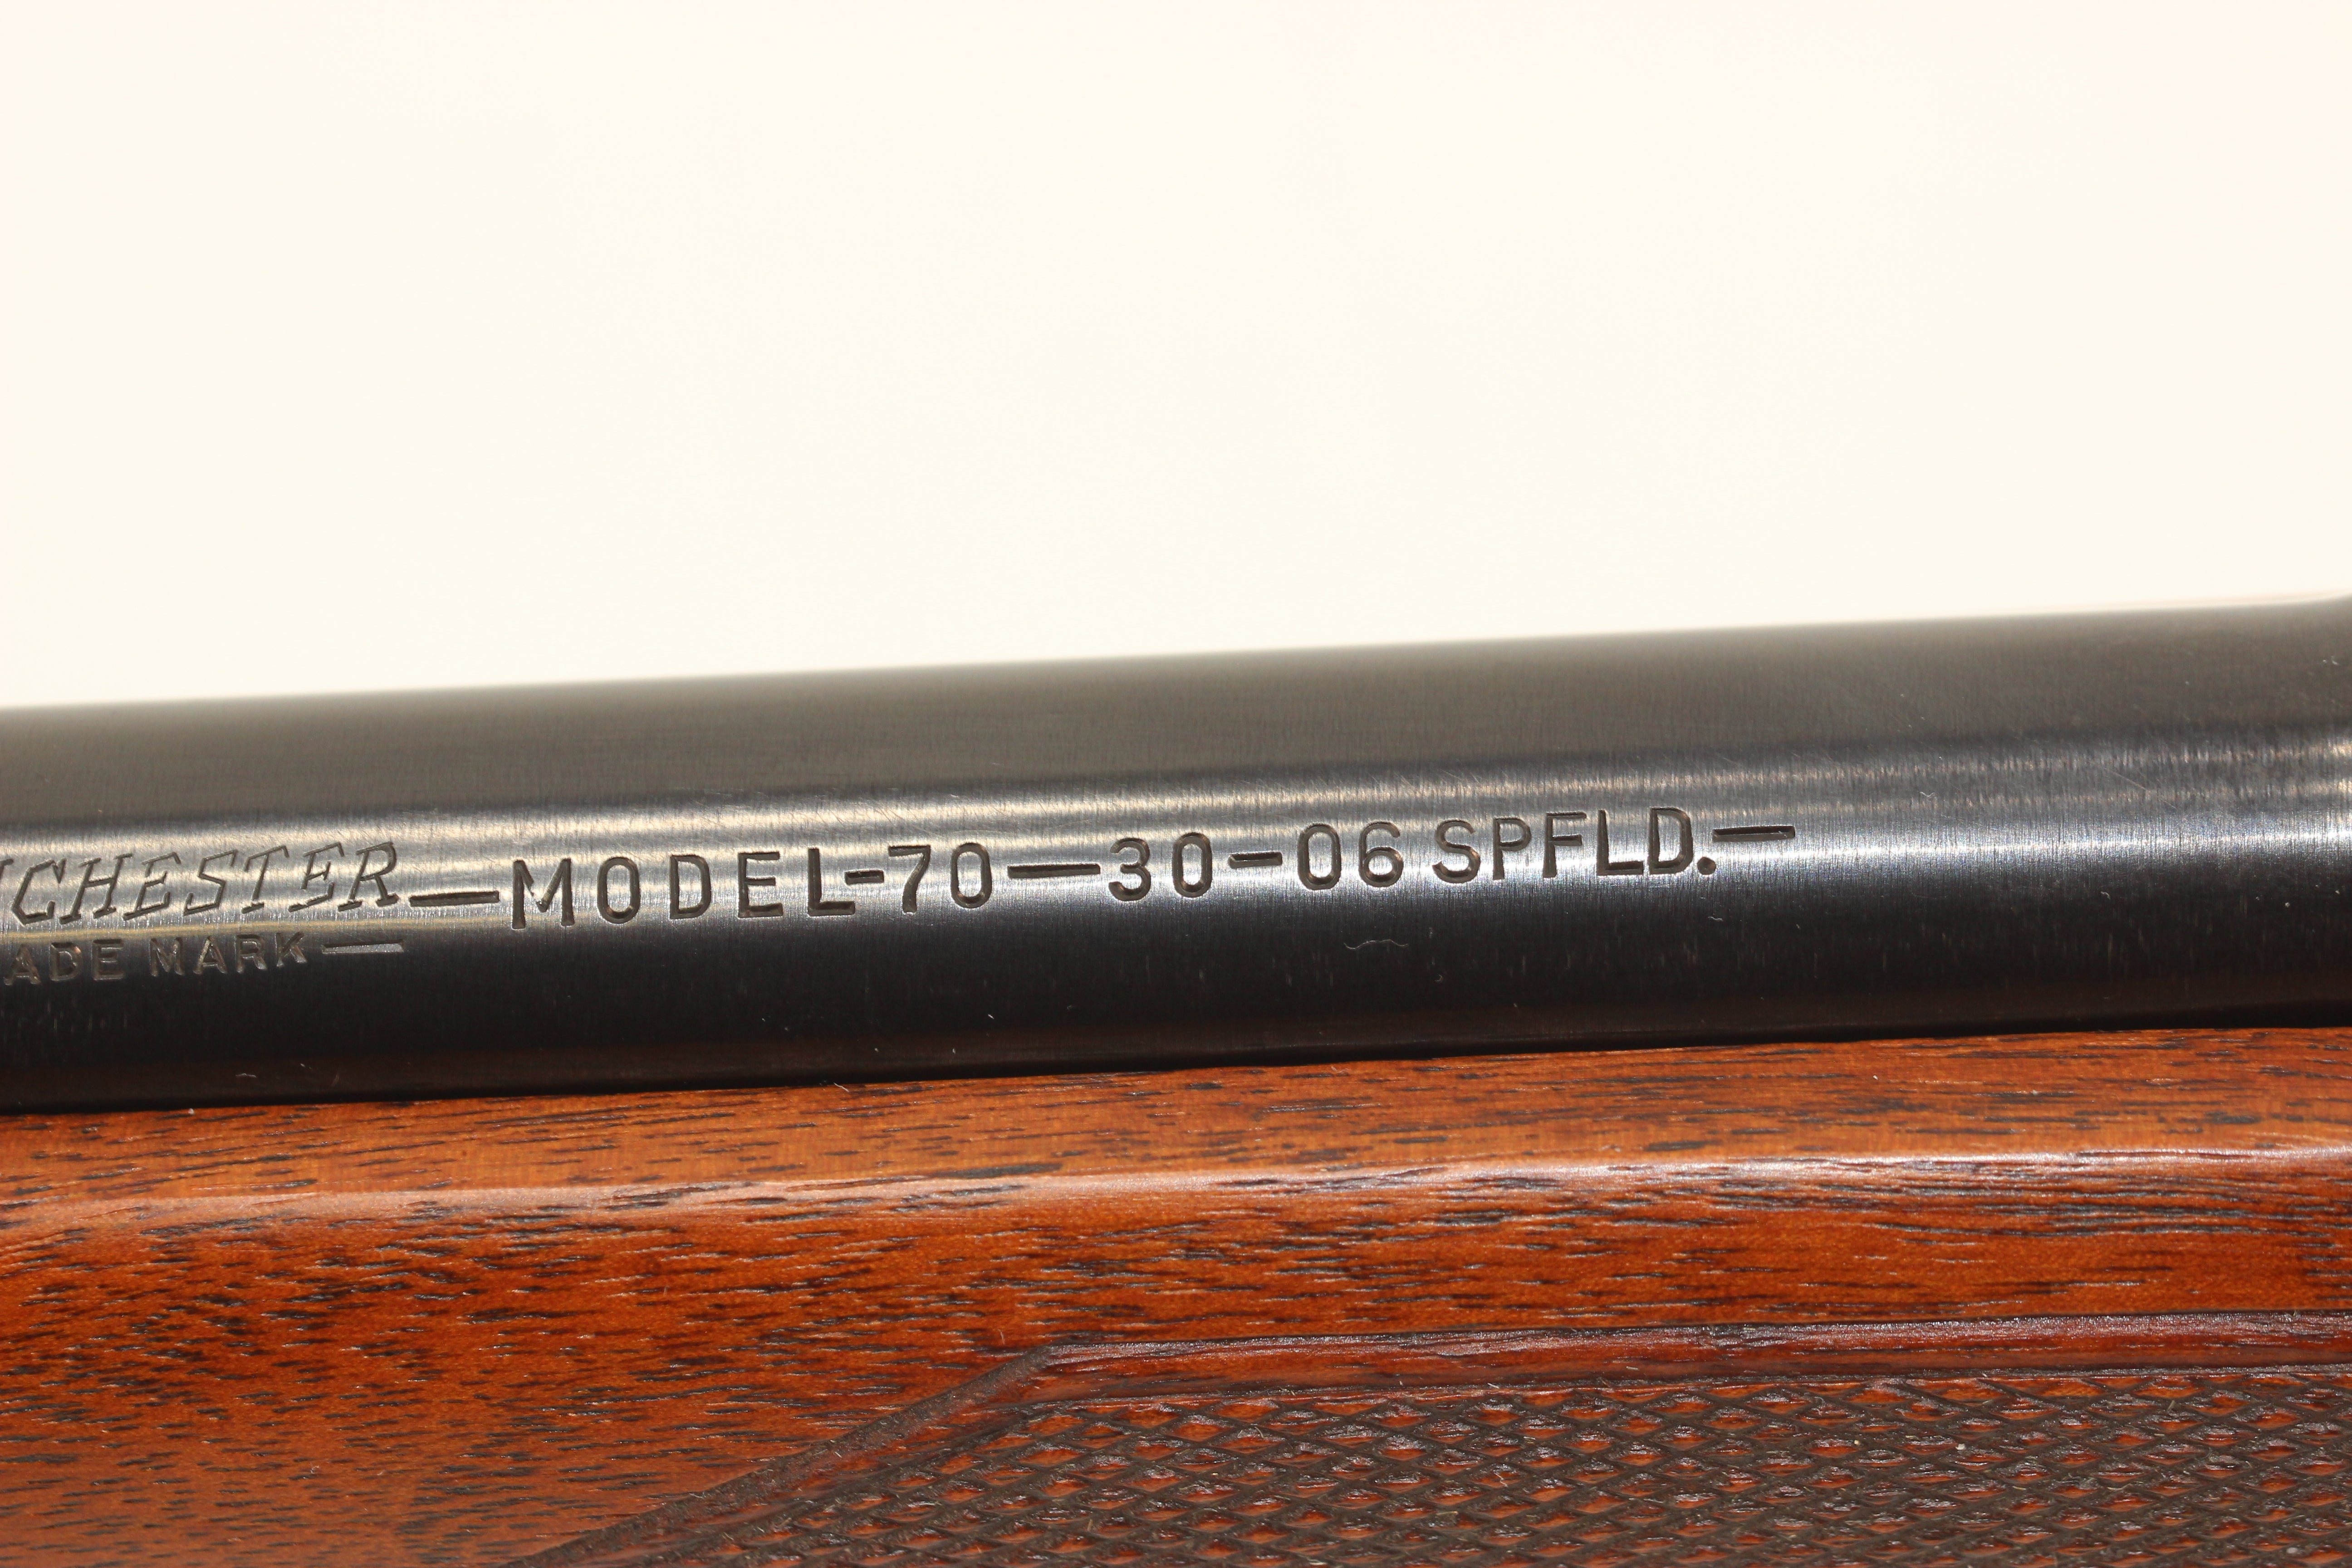 .30-06 Springfield Standard Rifle - 1955